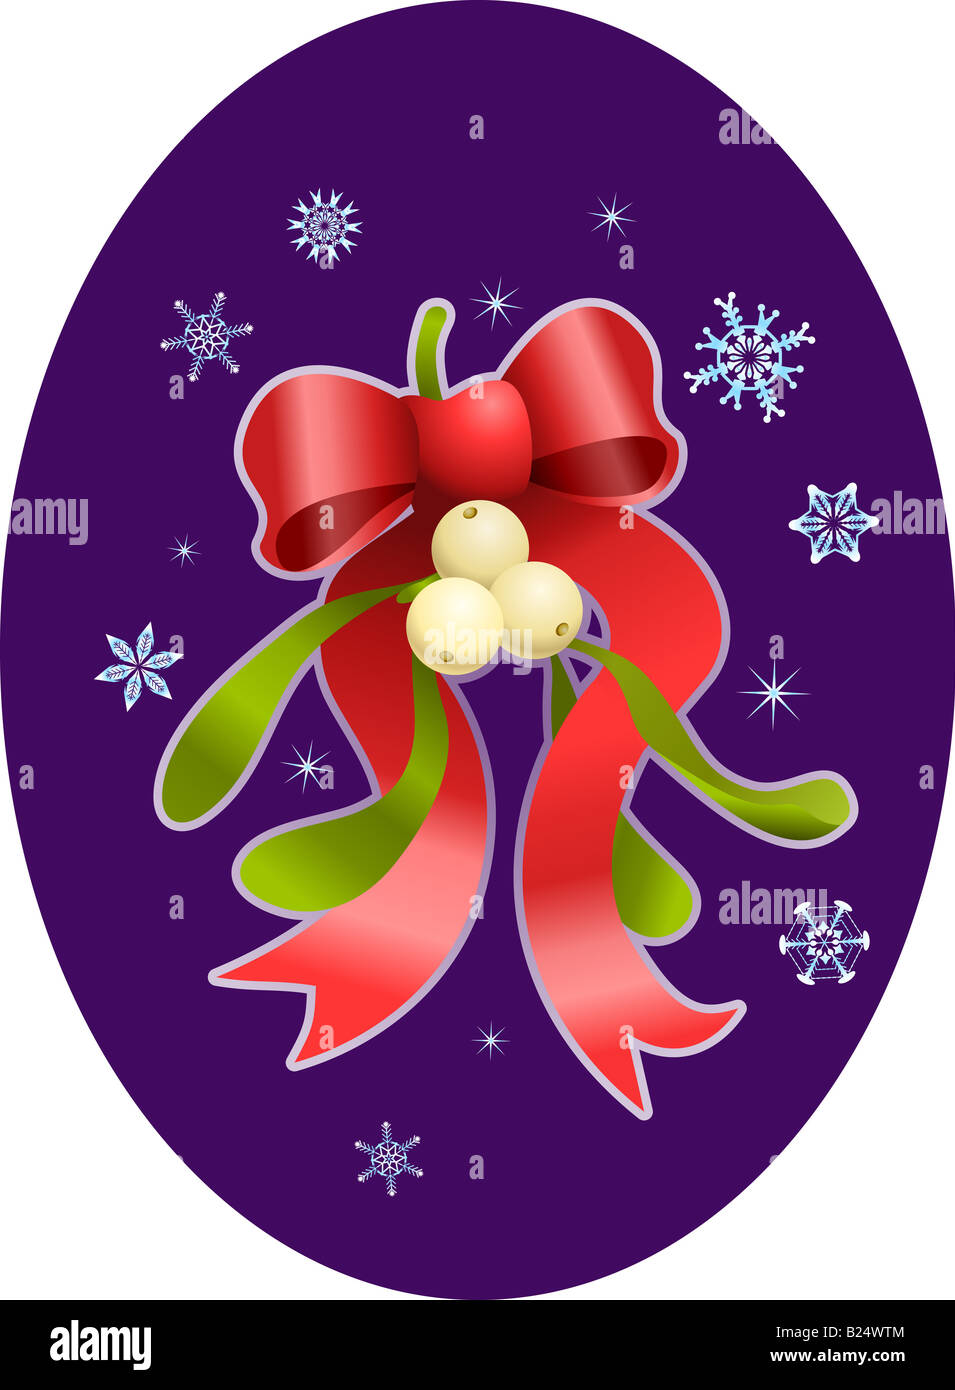 Christmas mistletoe. An illustration of Christmas mistletoe and bow Stock Photo